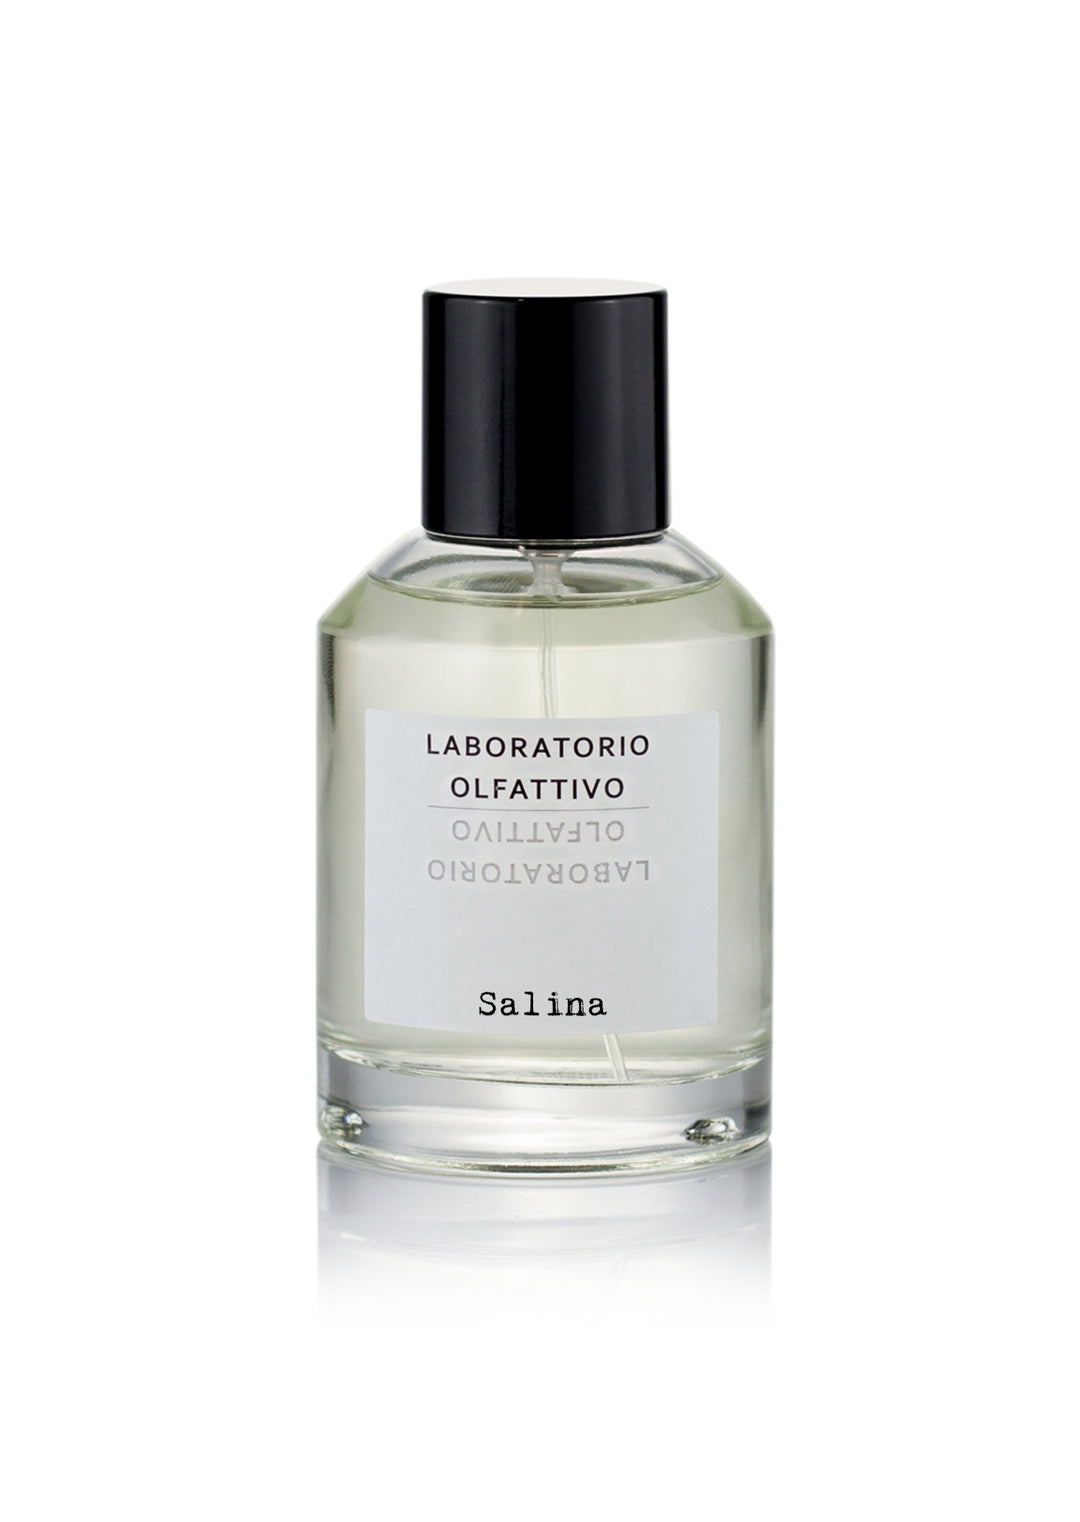 Salina Eau de Parfum by Laboratorio Olfattivo.